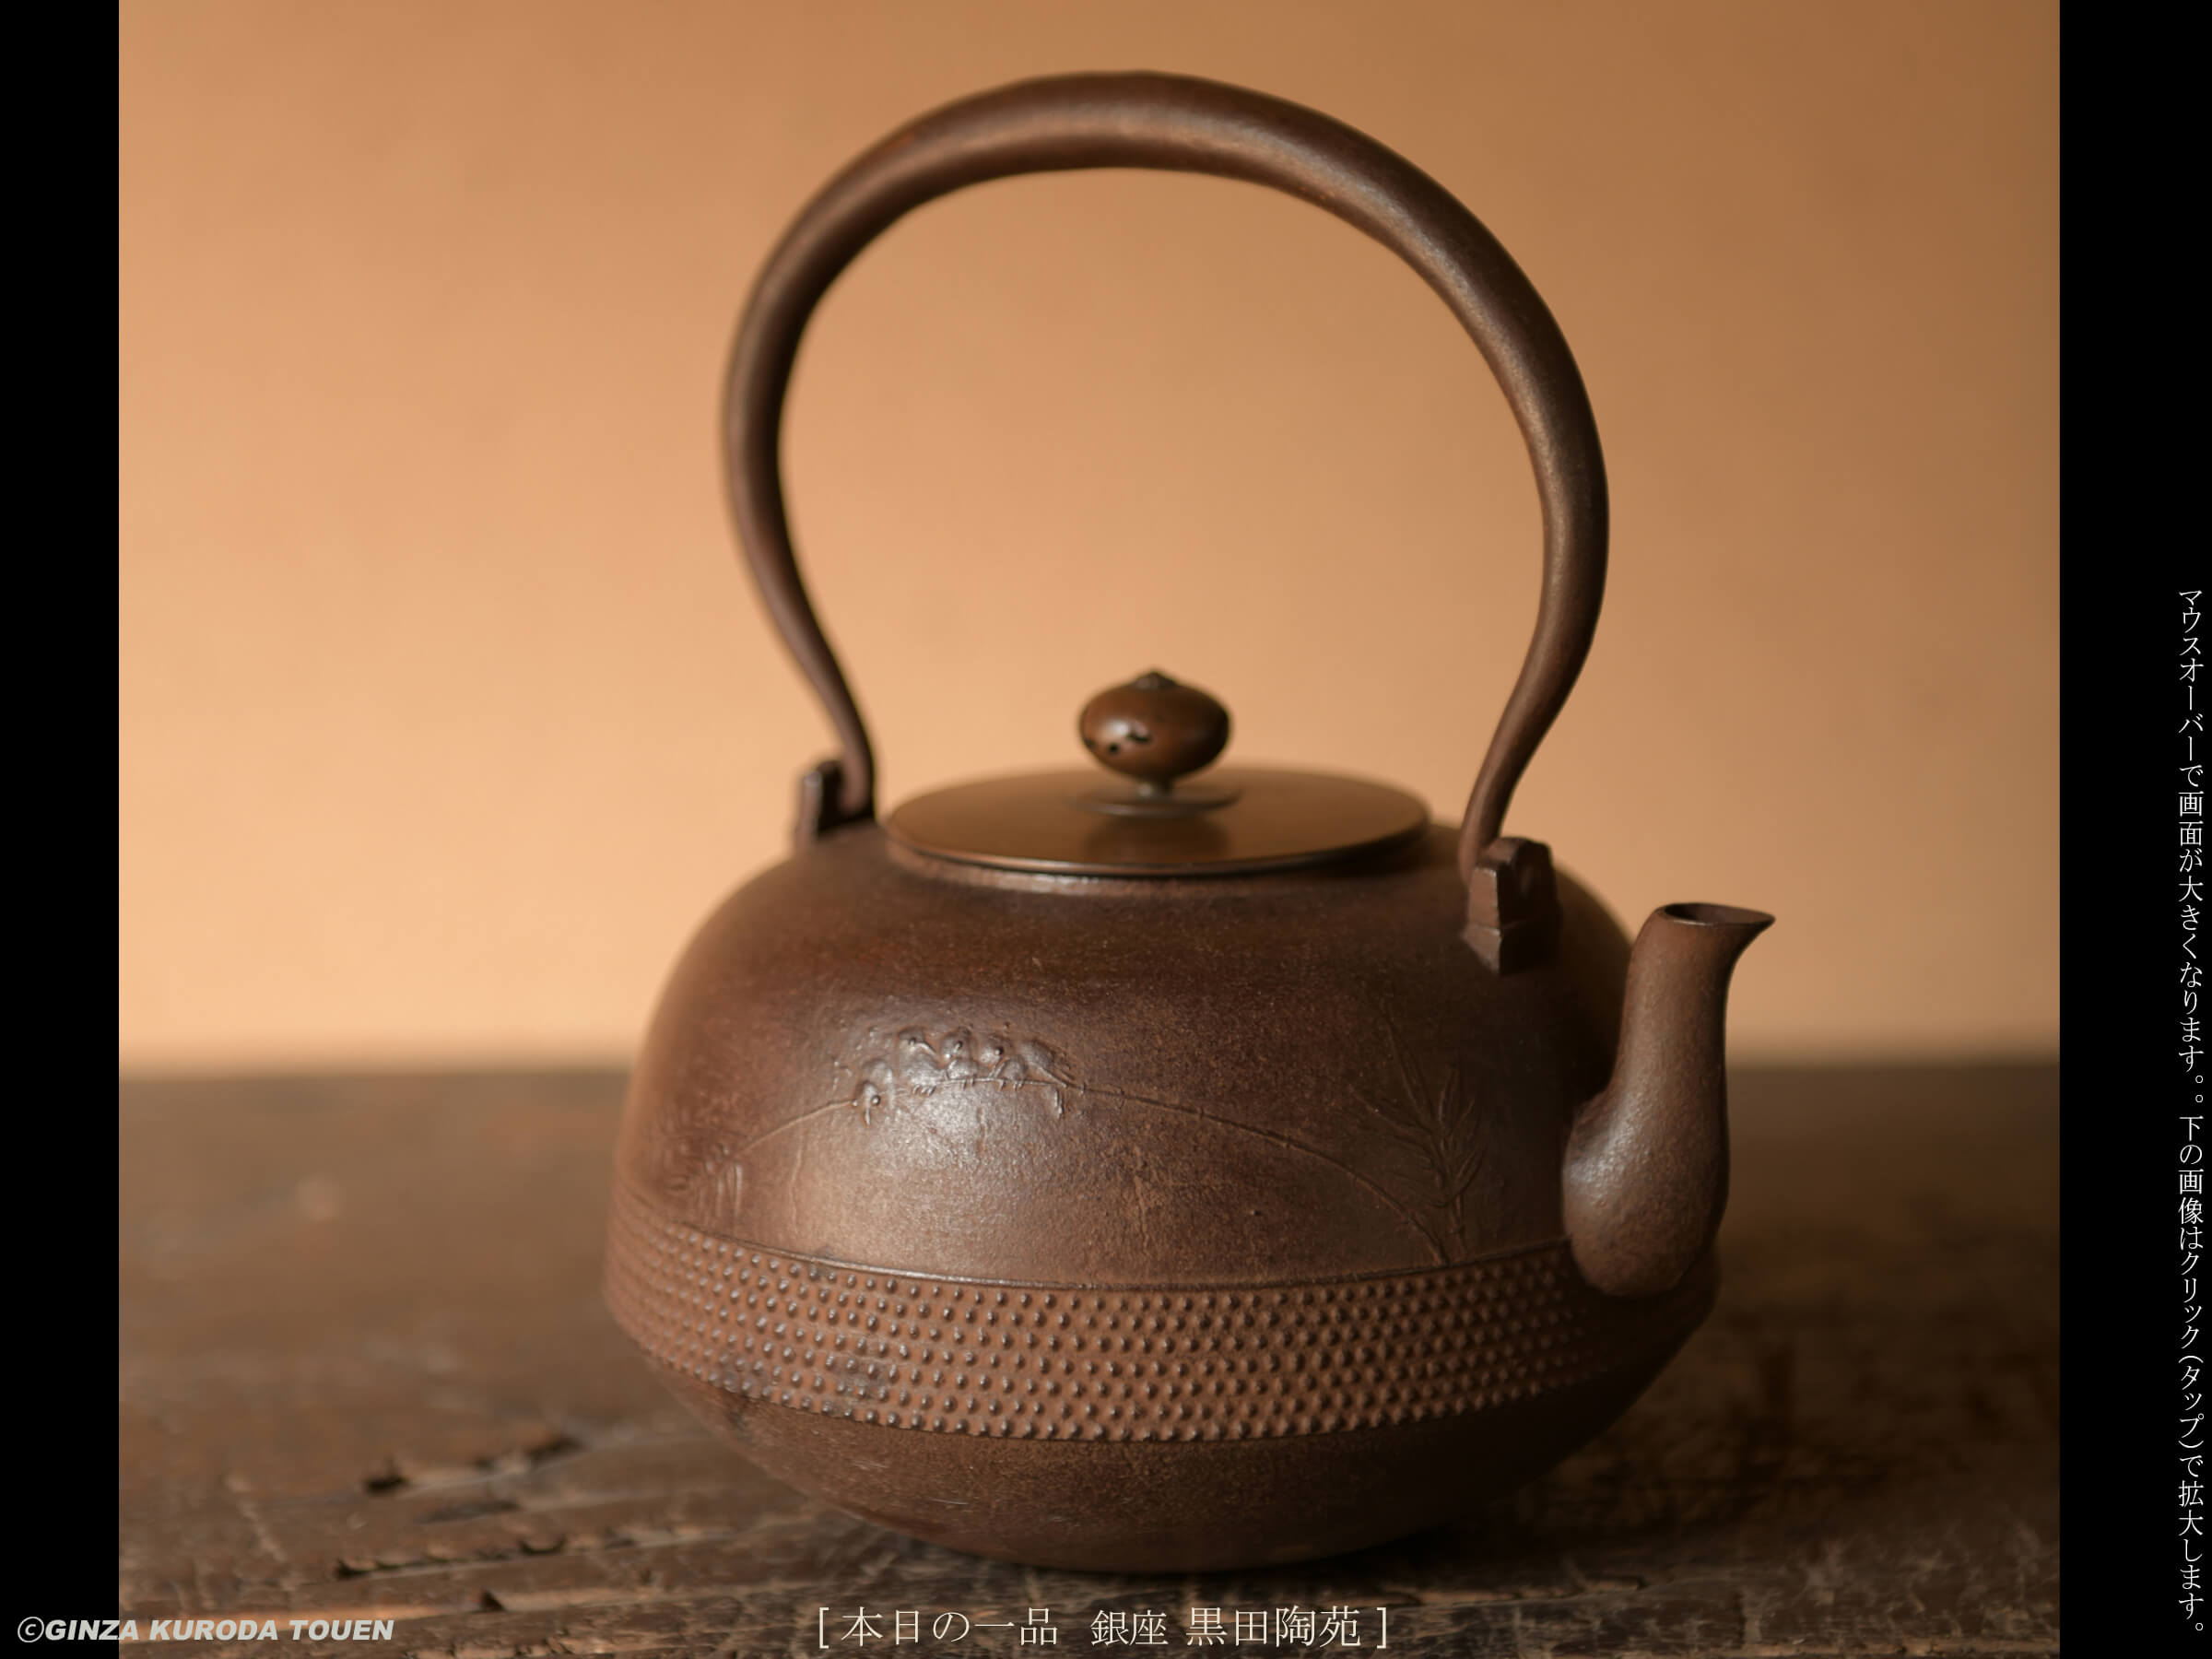 Tesshi Nagano : Iron kettle